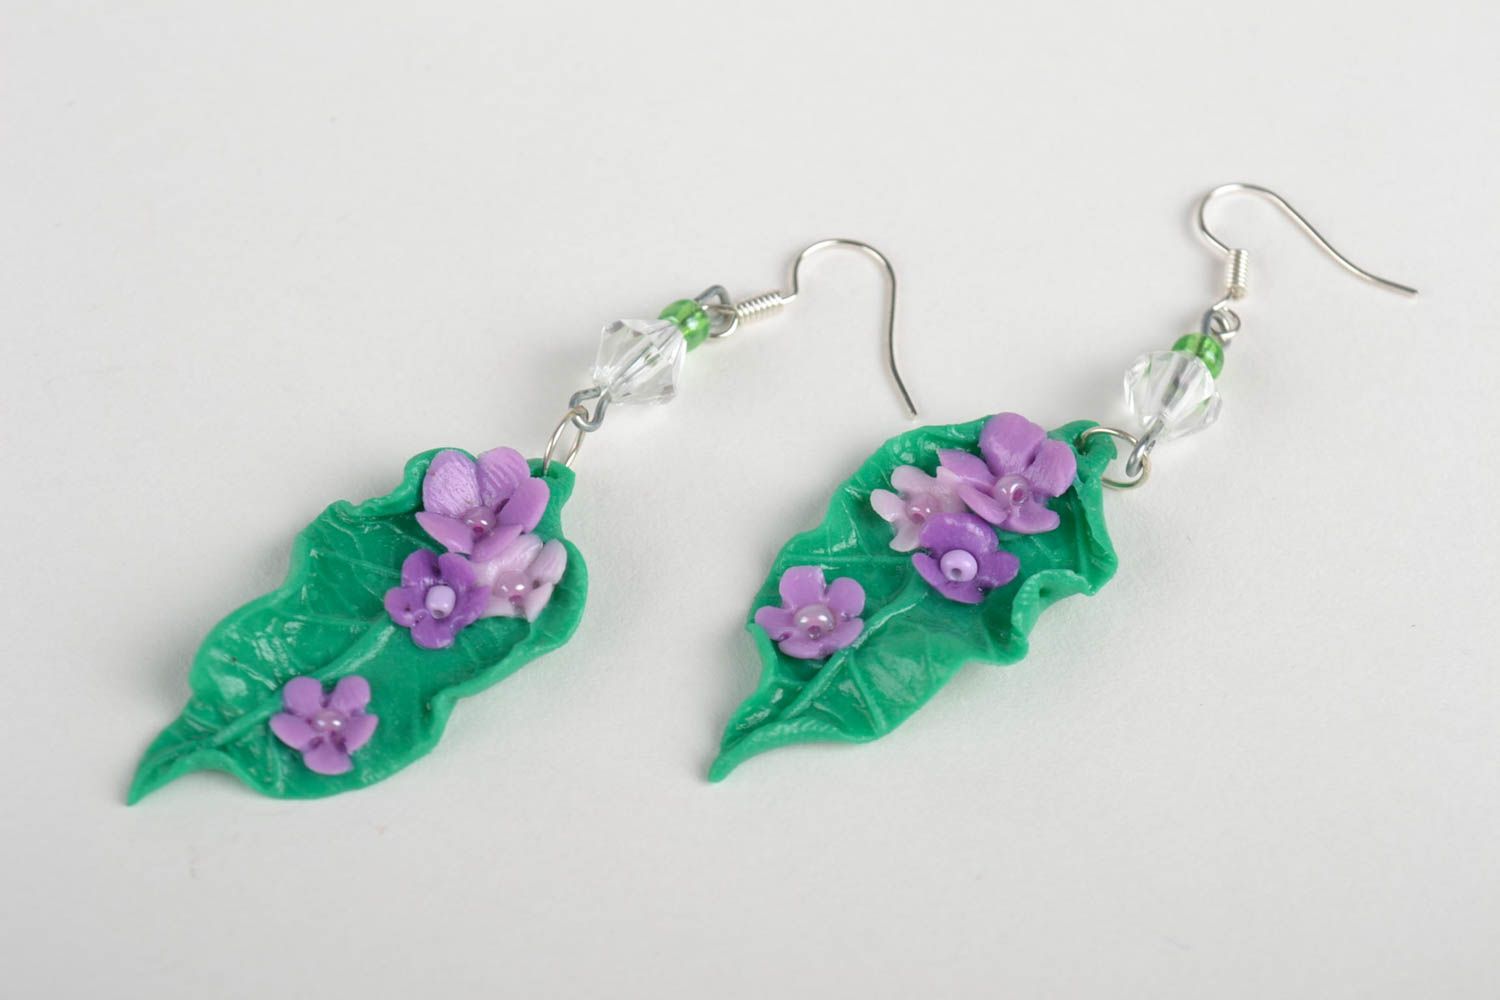 Handmade earrings designer earrings handcrafted jewelry polymer clay gift ideas photo 3